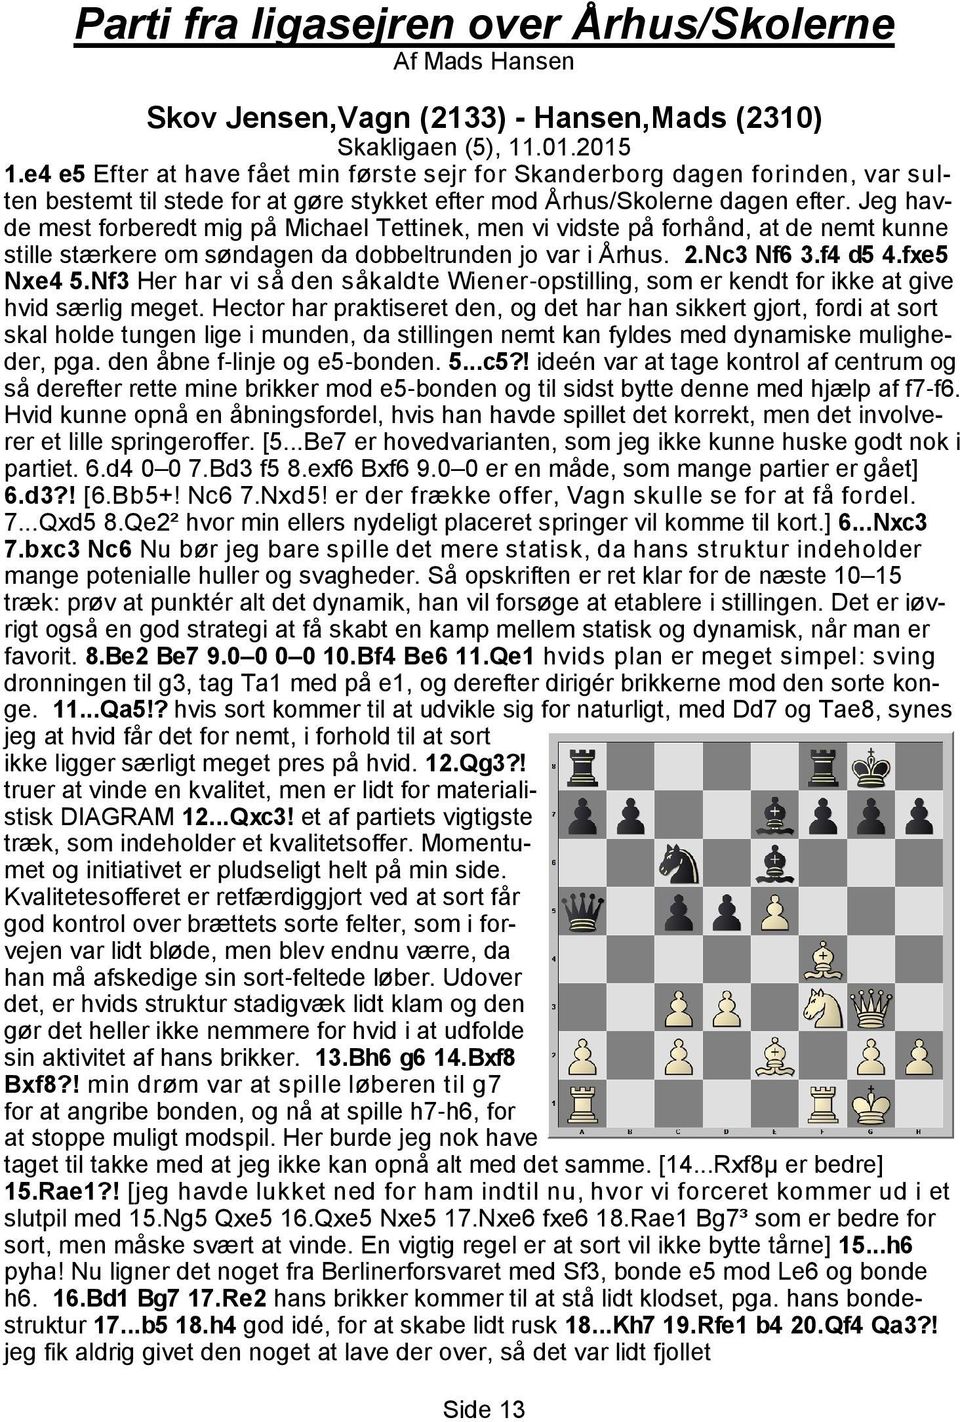 Jeg havde mest forberedt mig på Michael Tettinek, men vi vidste på forhånd, at de nemt kunne stille stærkere om søndagen da dobbeltrunden jo var i Århus. 2.Nc3 Nf6 3.f4 d5 4.fxe5 Nxe4 5.